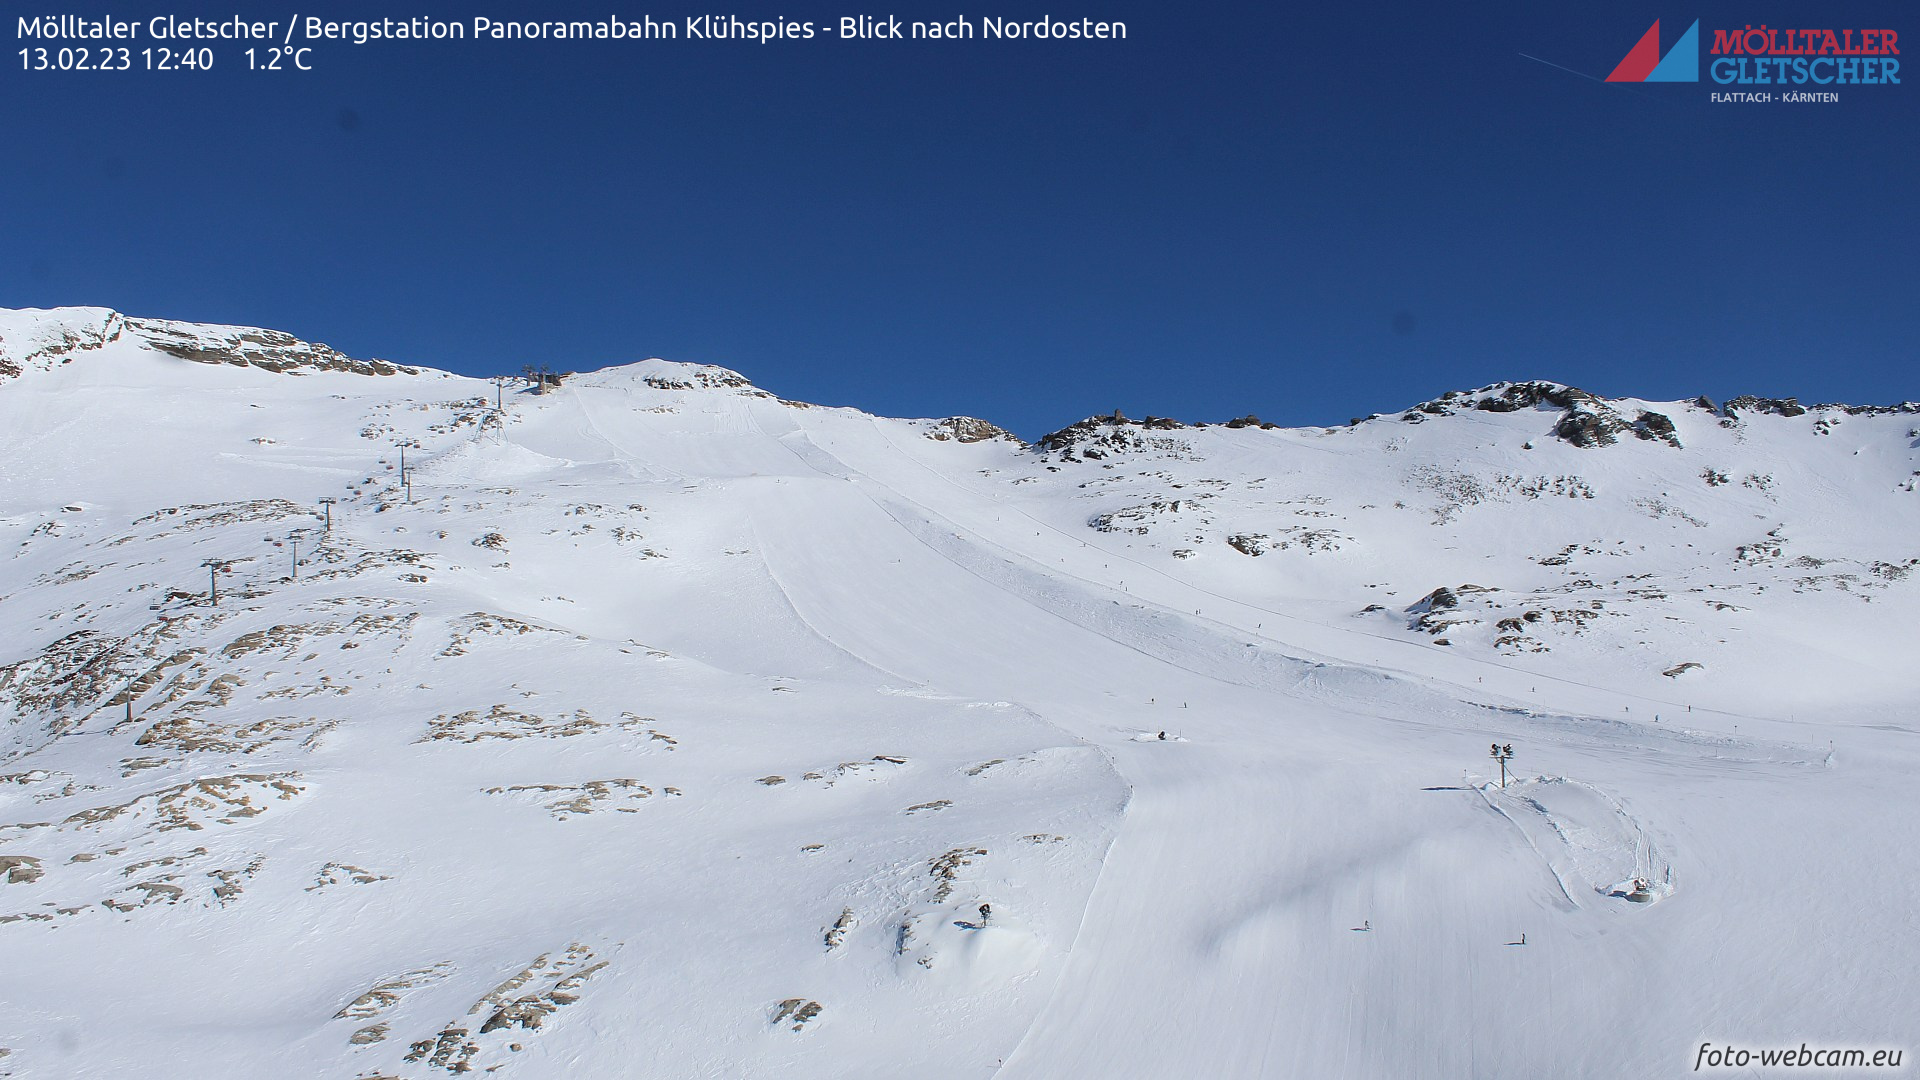 Mai webkamera: Mölltal-gleccser Panoramabahn 2795 m